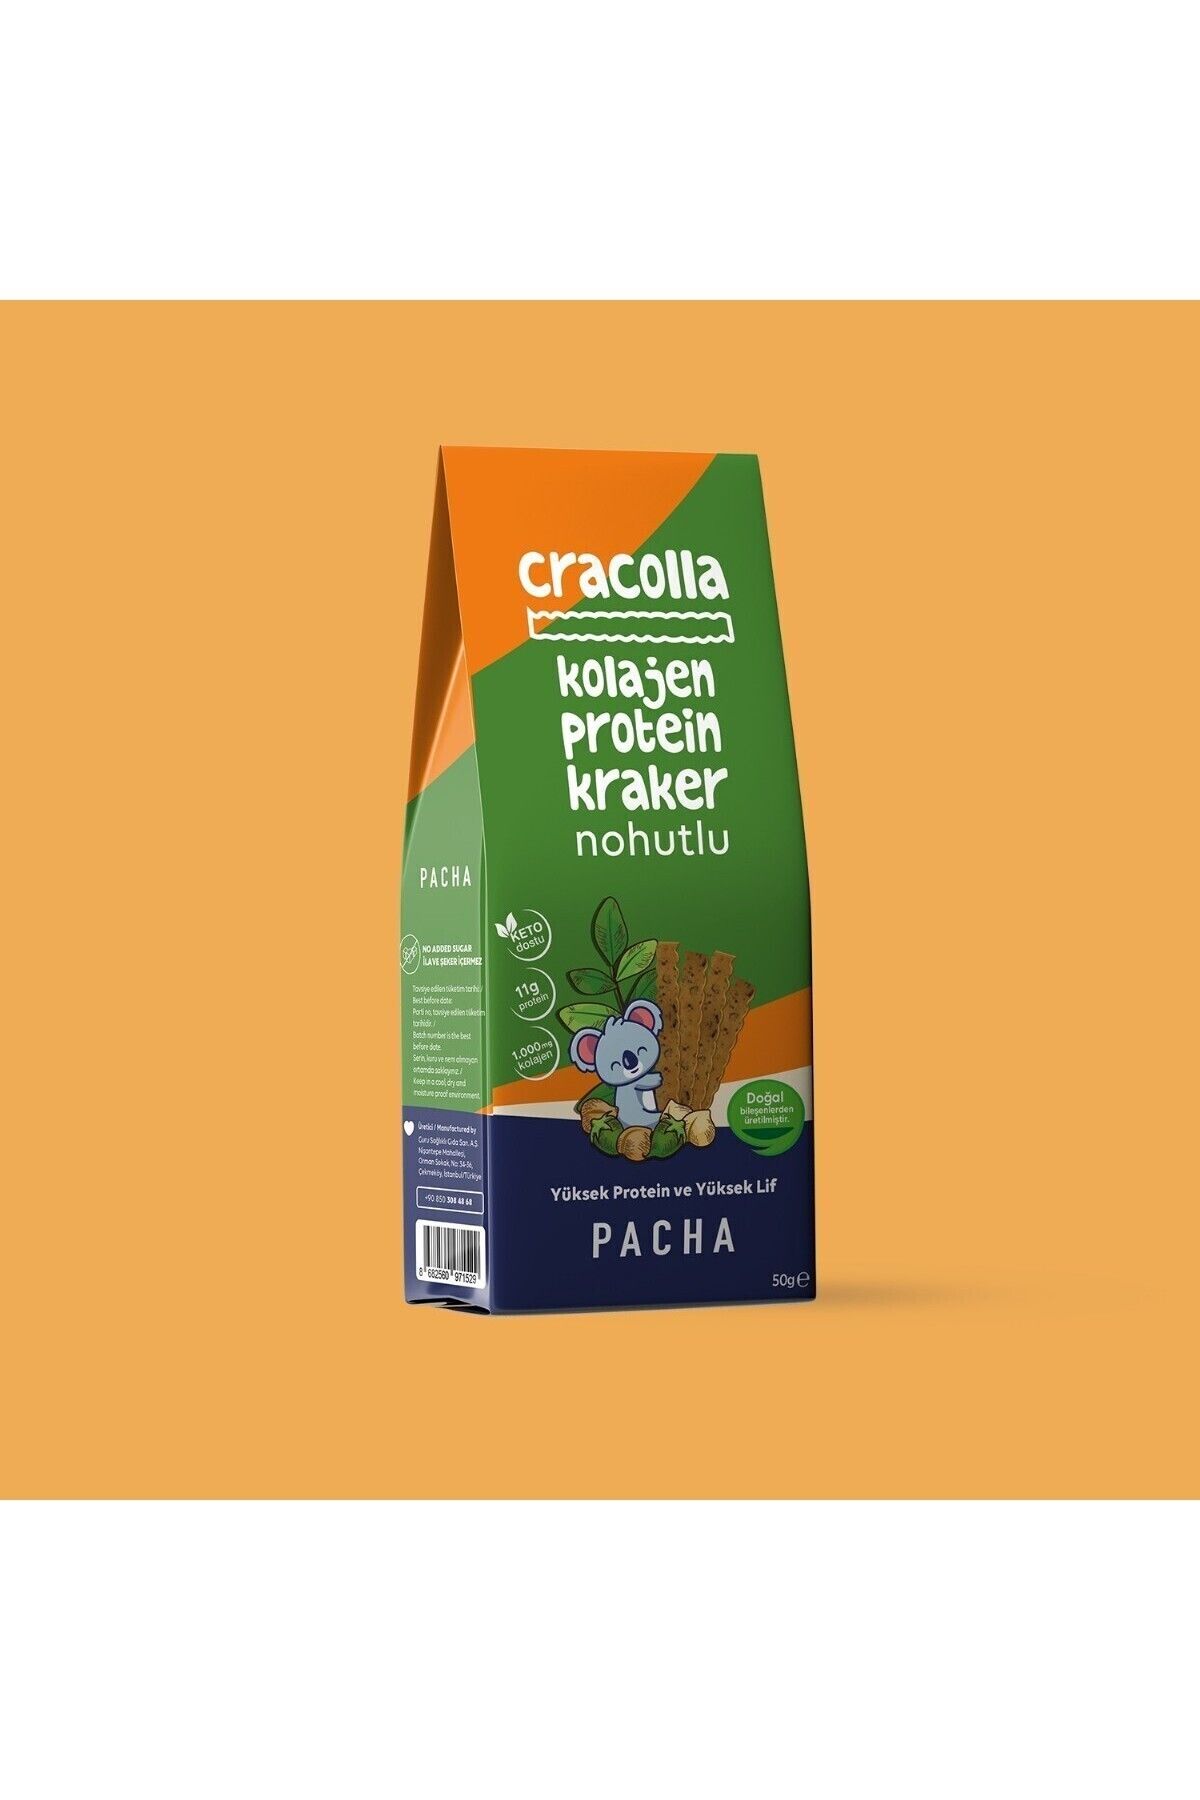 PACHA Cracolla | Doğal Kolajen Ve Protein Kraker | Nohutlu